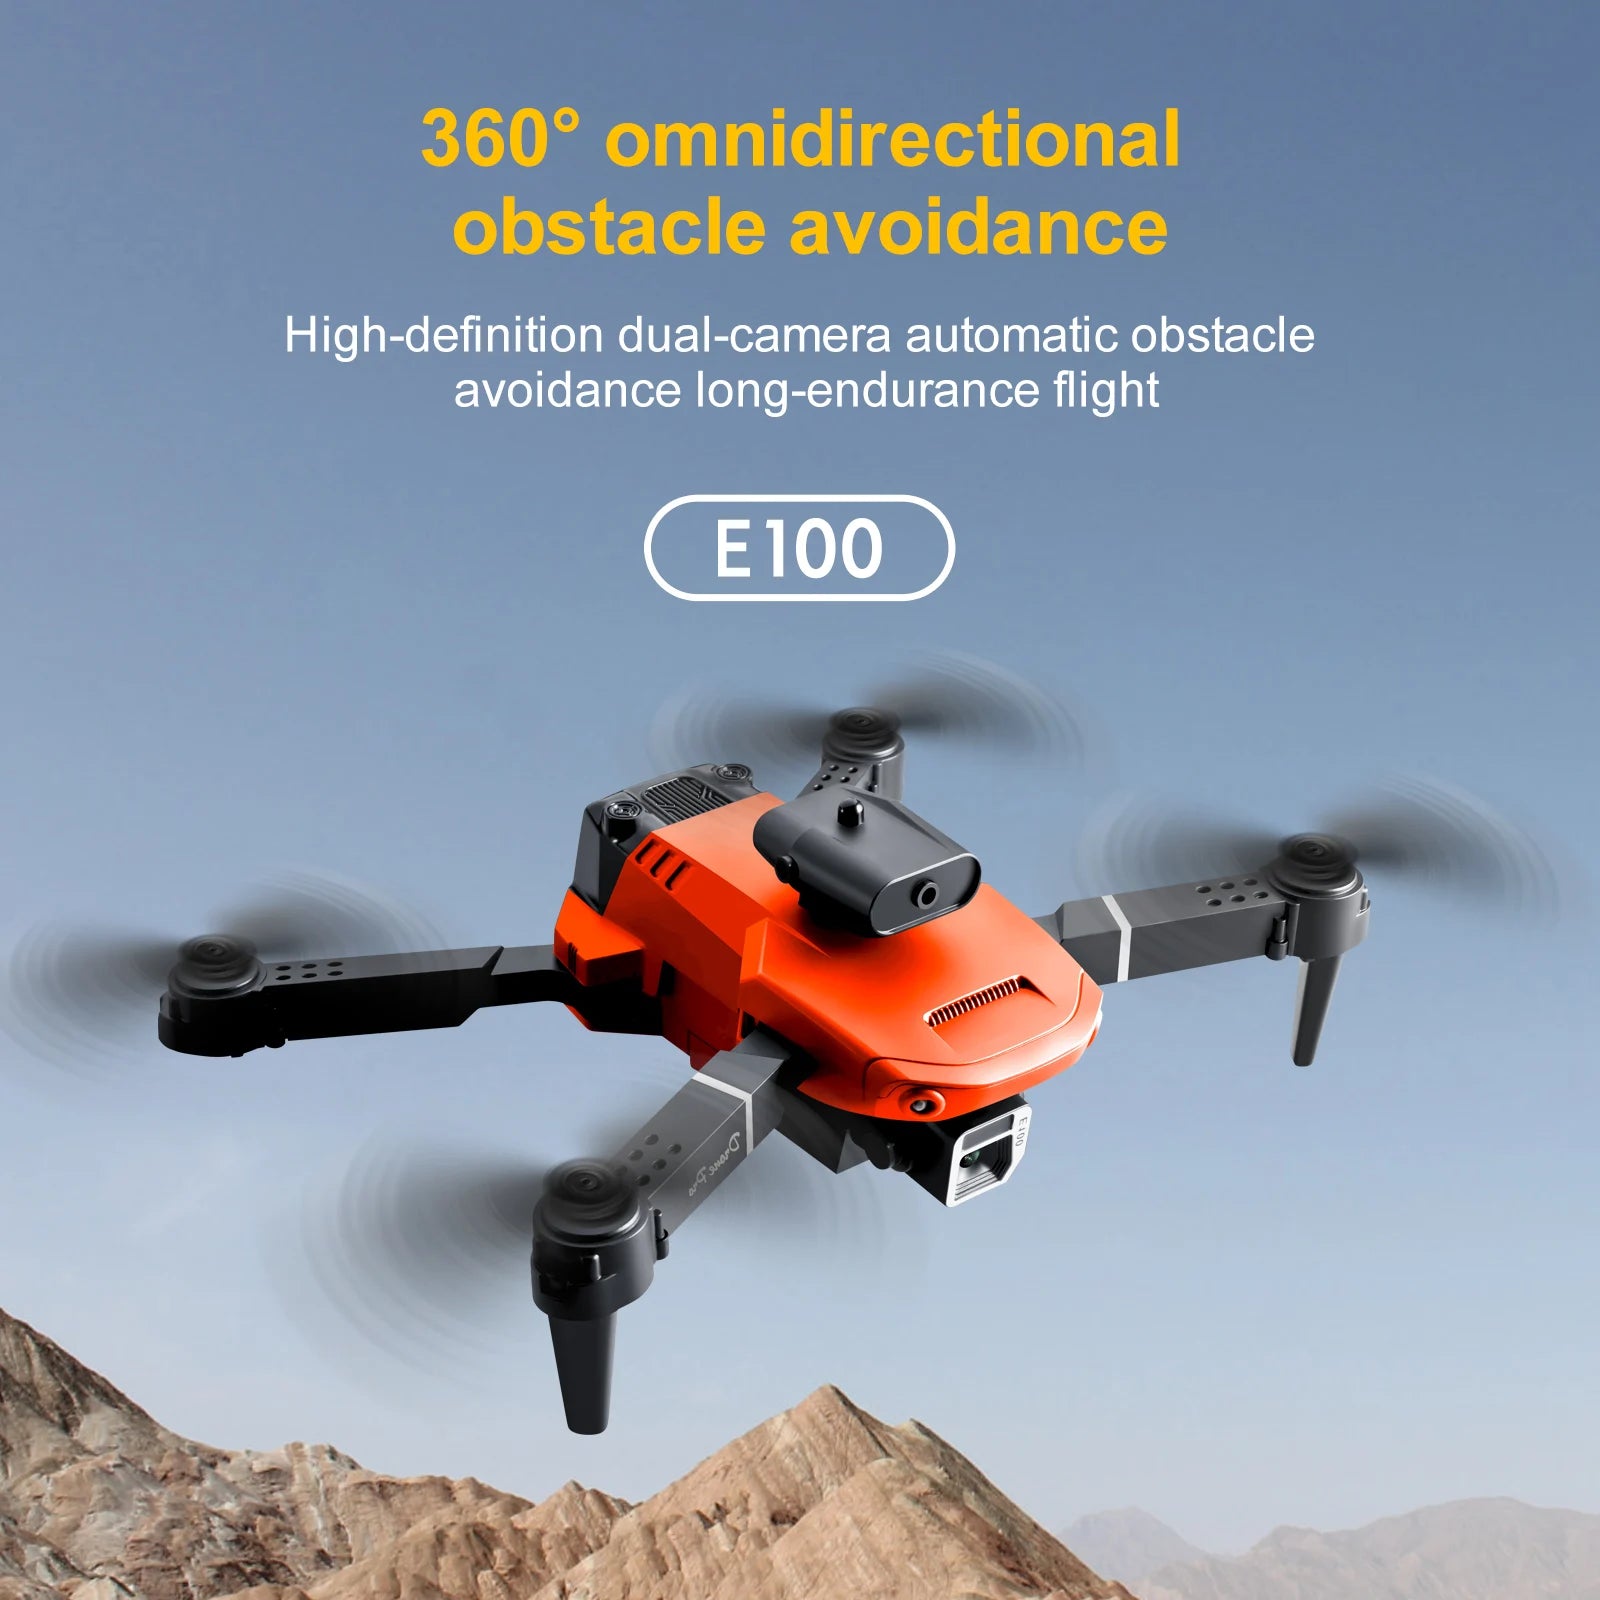 KBDFA E100 Mini Drone, 3600 omnidirectional obstacle avoidance high-definition dual